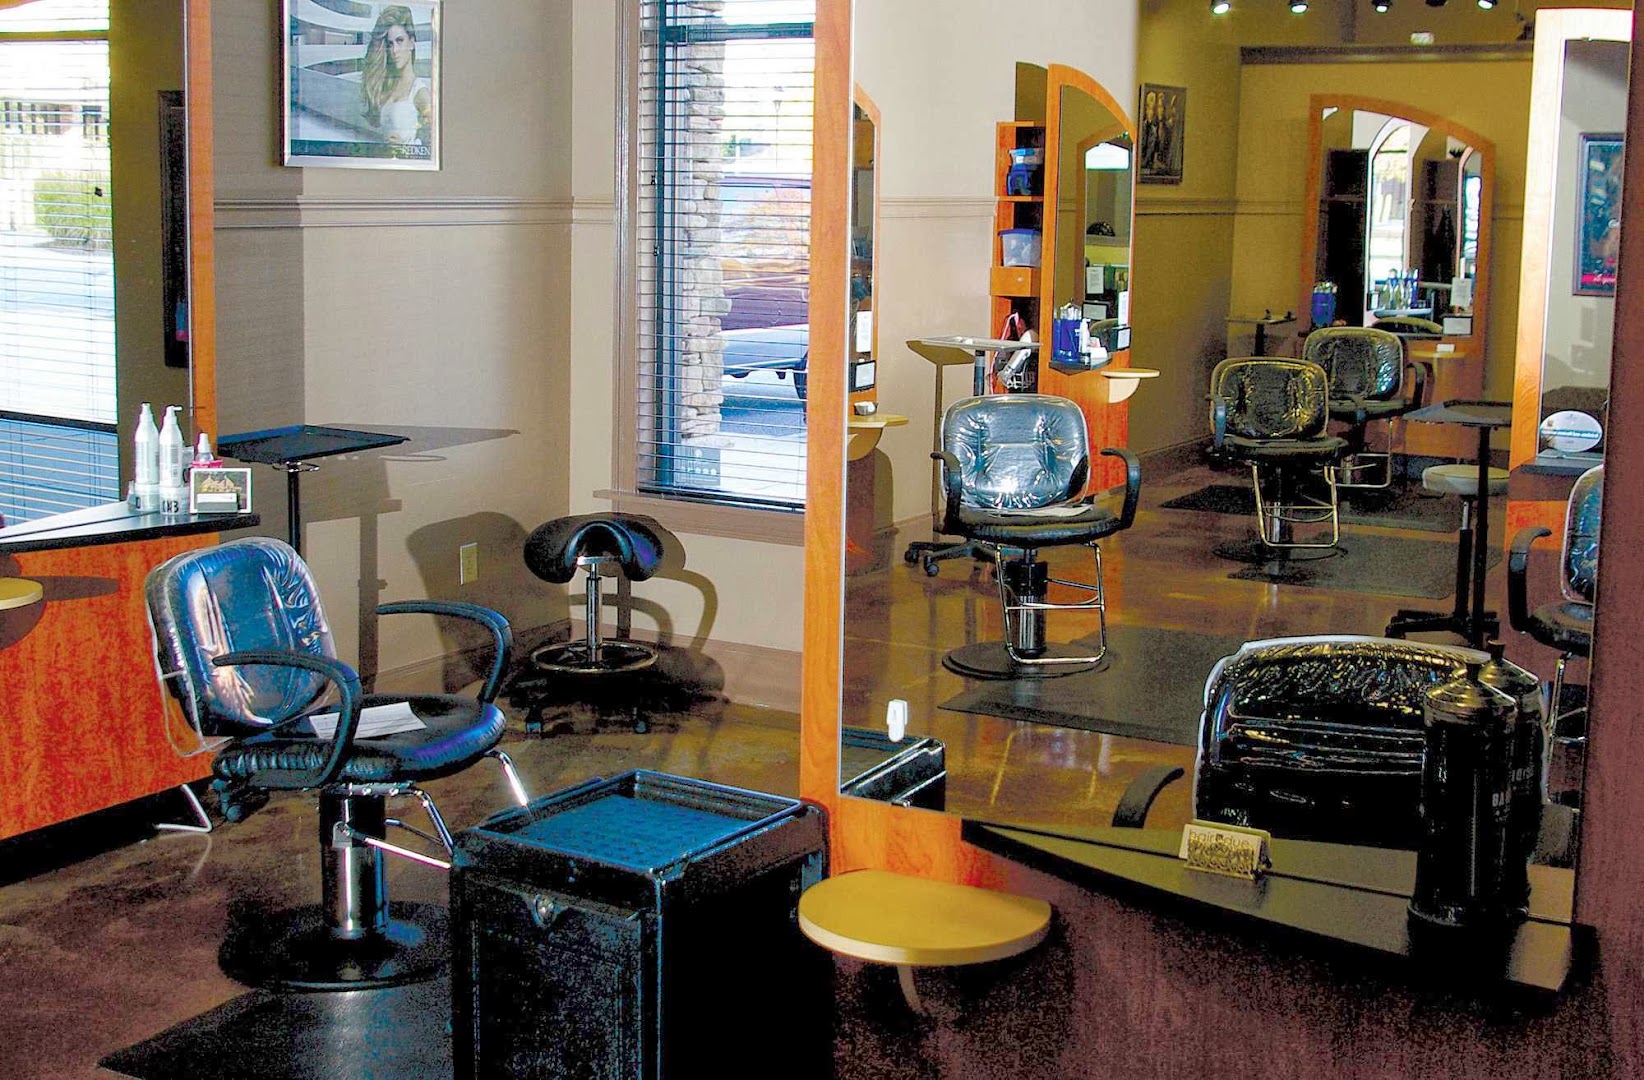 Hairdue Salon & Spa